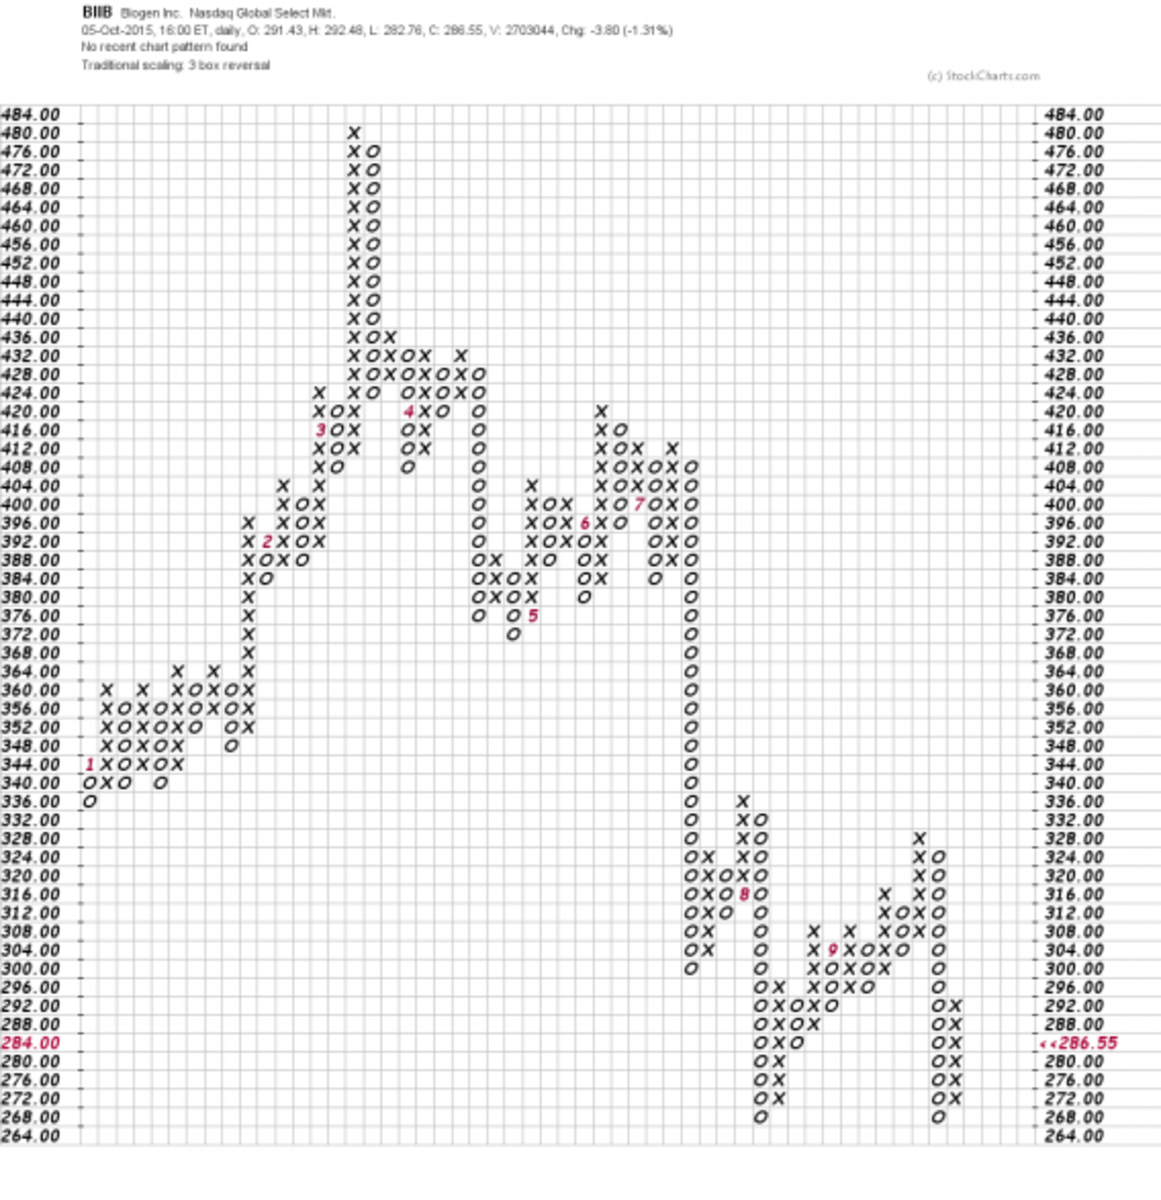 Biib Stock Chart